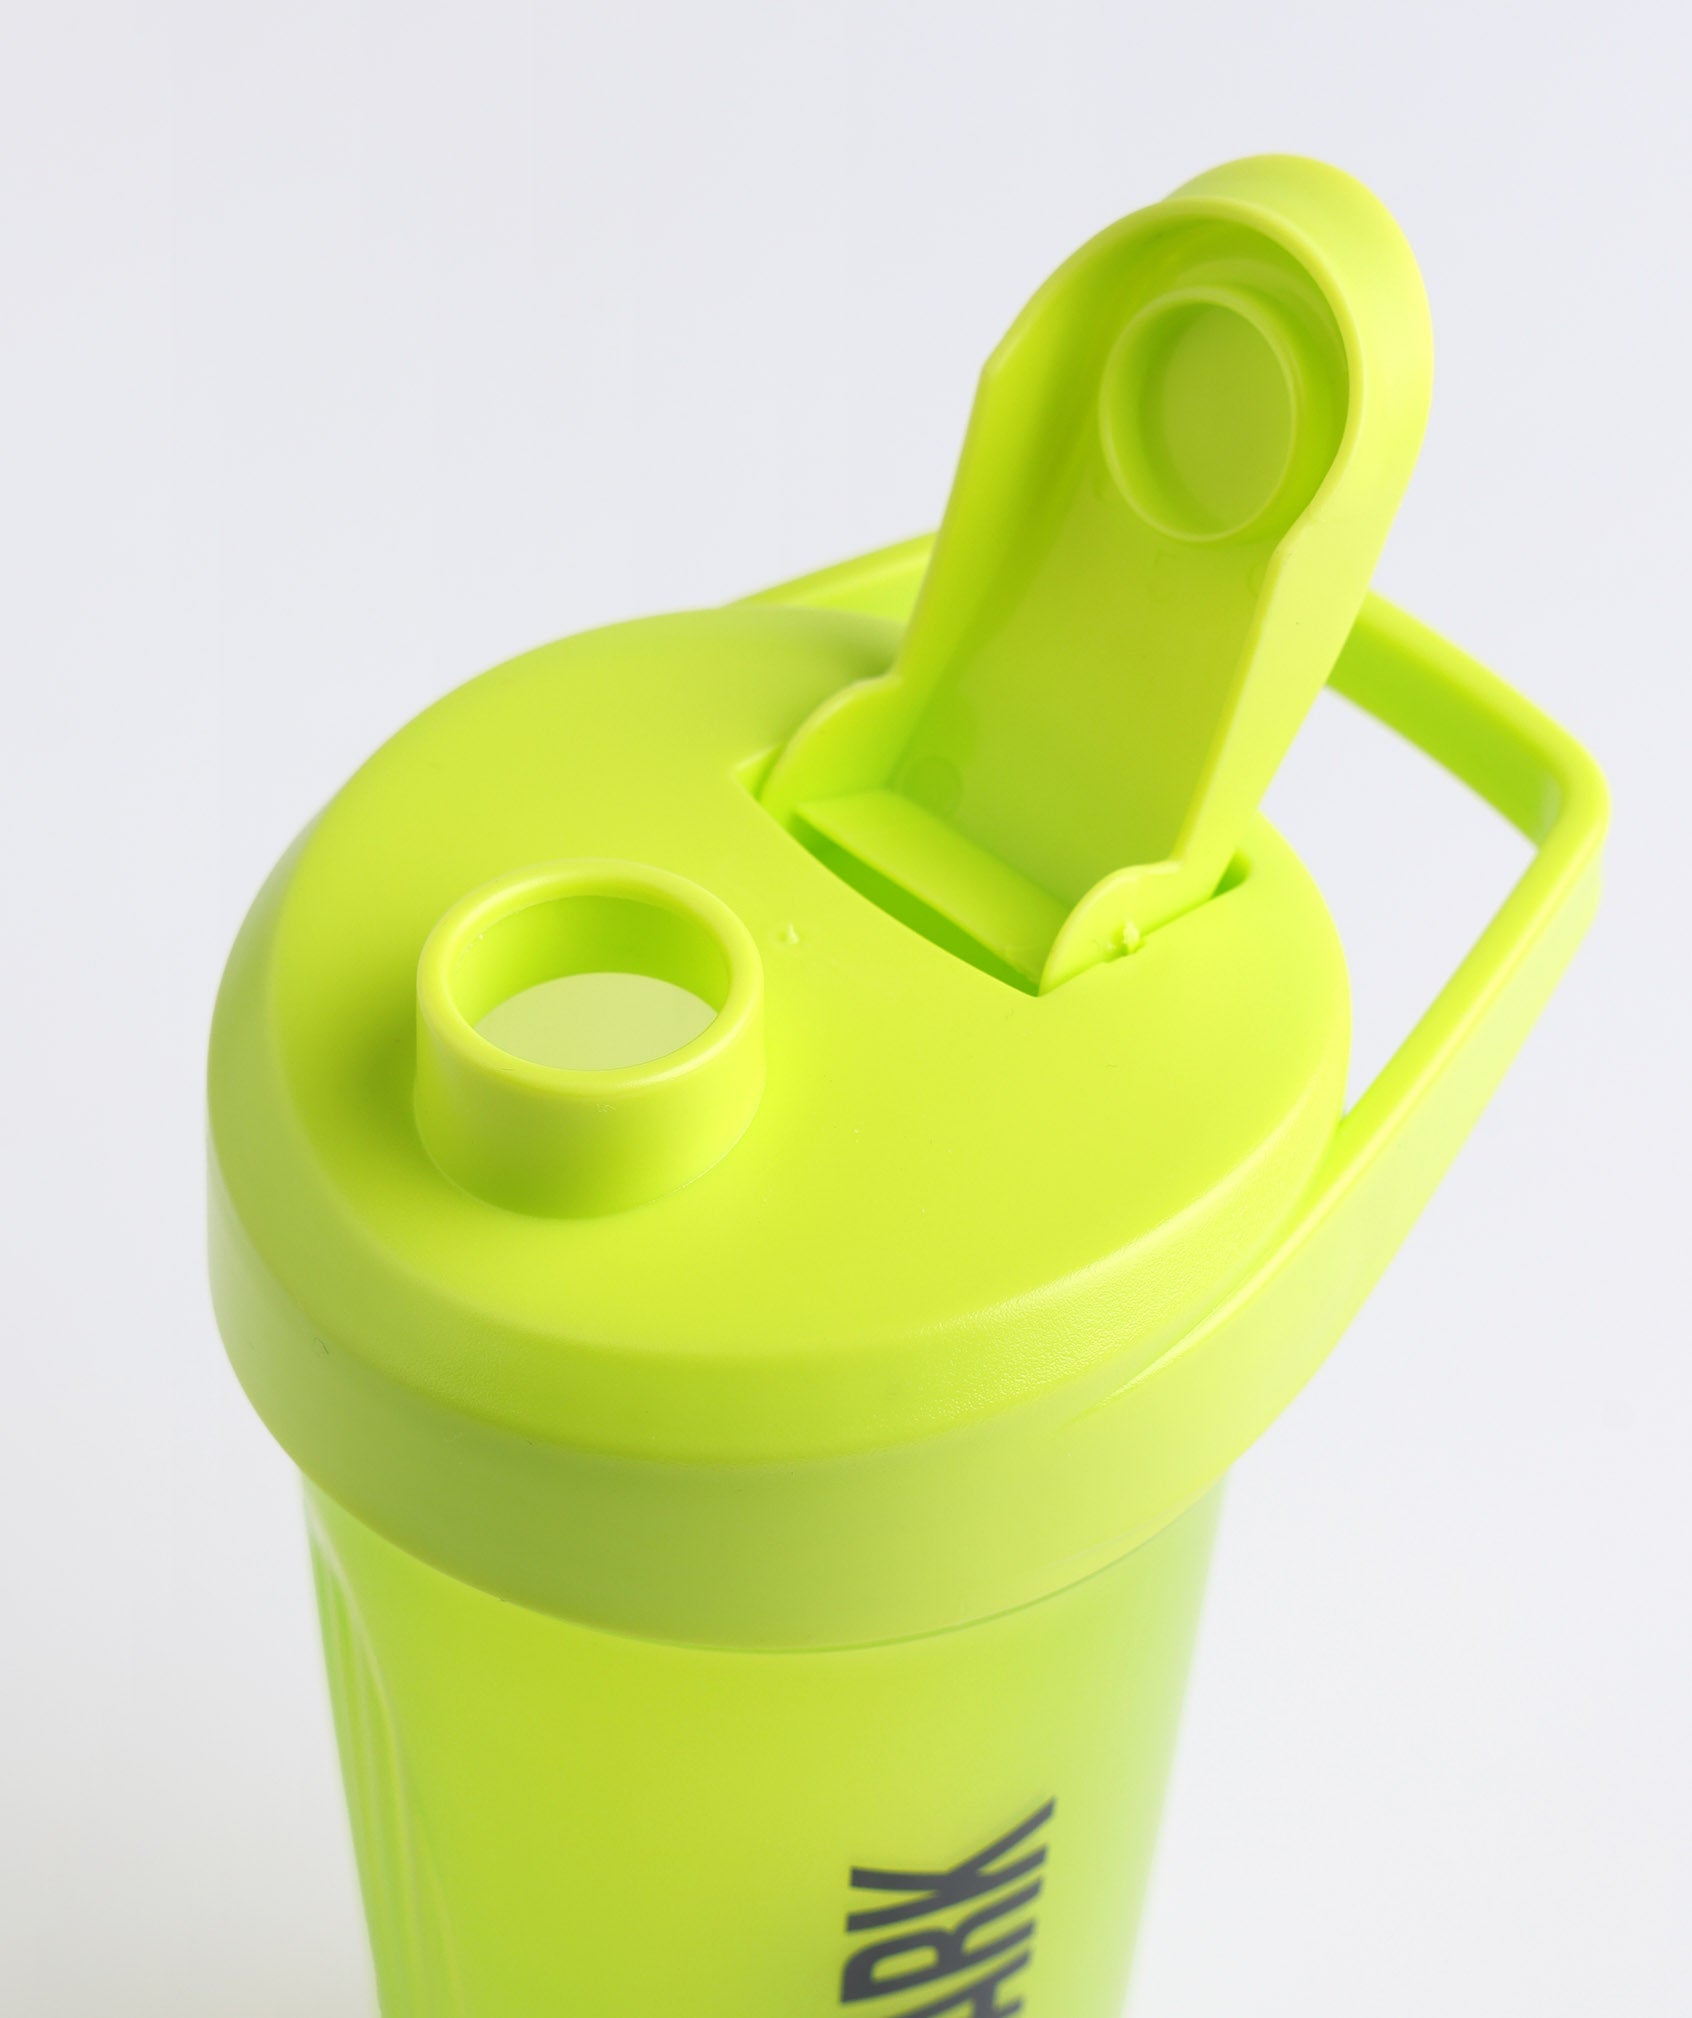 14oz Shaker Bottle in Fluo Lime - view 2